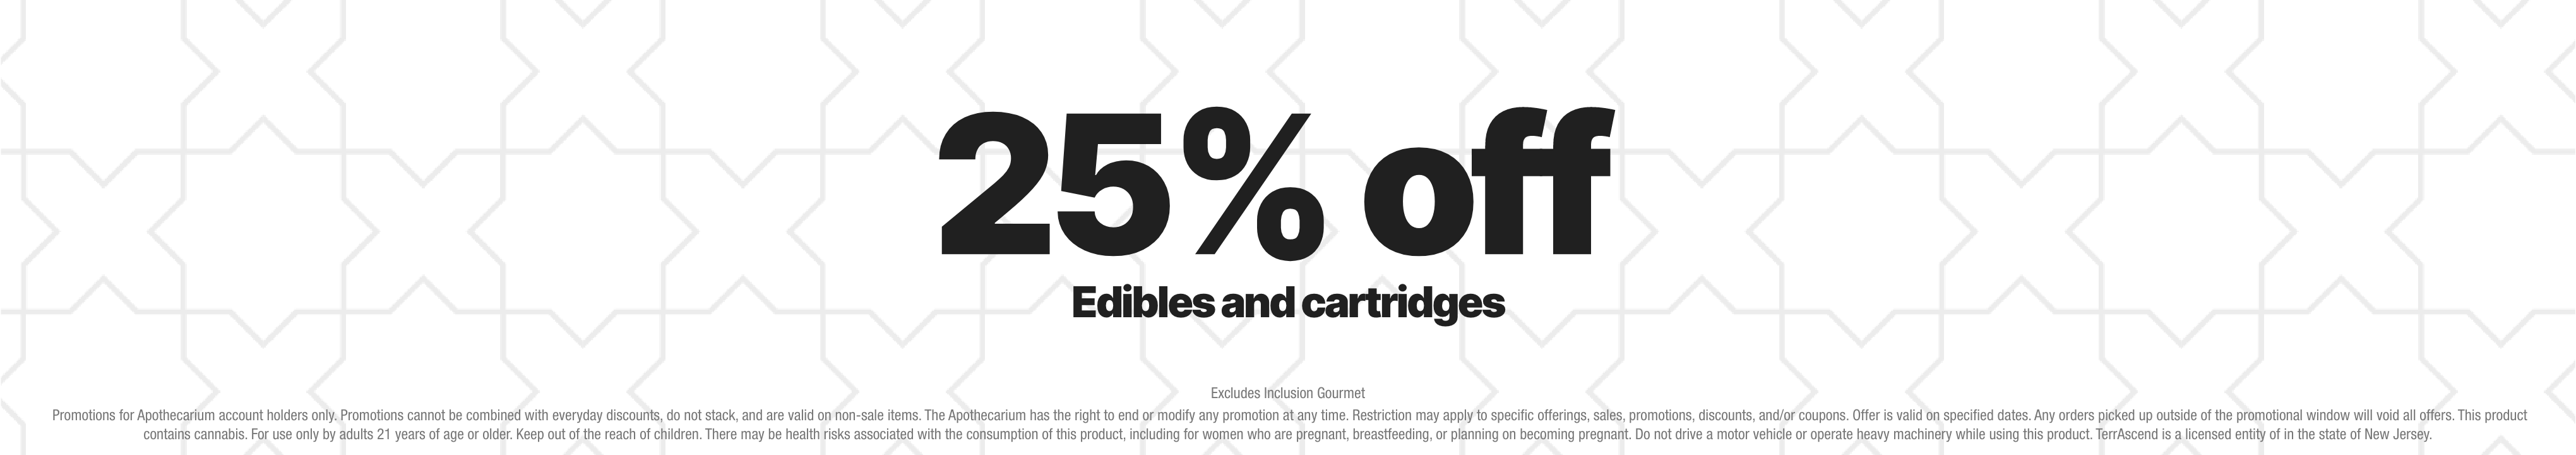 Cannabis Promo, Cannabis Sales, Cannabis Discounts, Cannabis on Sale, Puffs & Sweets - 25% Off Edibles And Cartridges! WEB